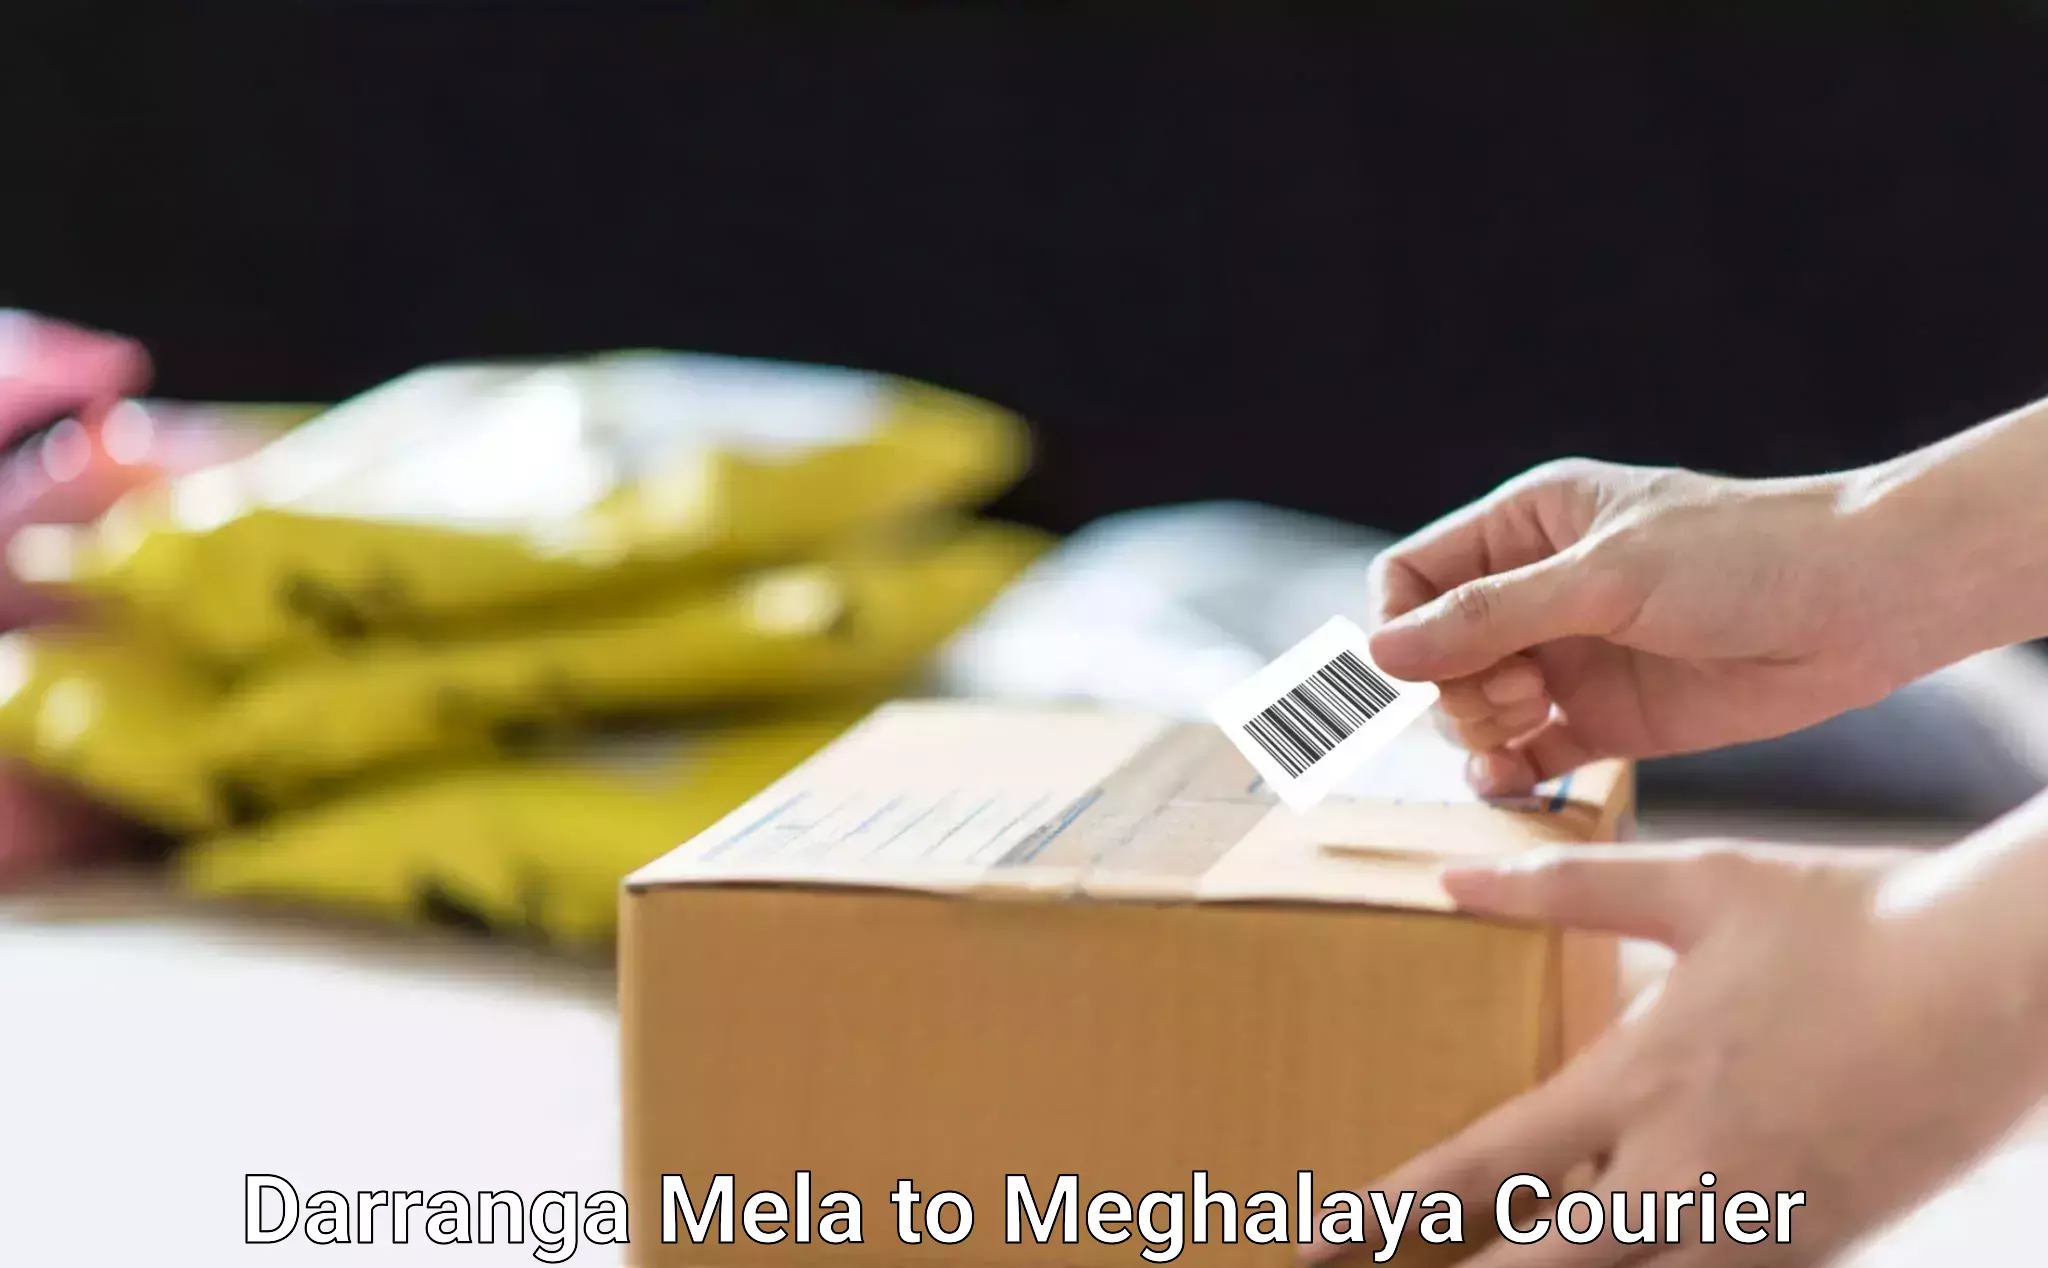 Business delivery service Darranga Mela to Dkhiah West